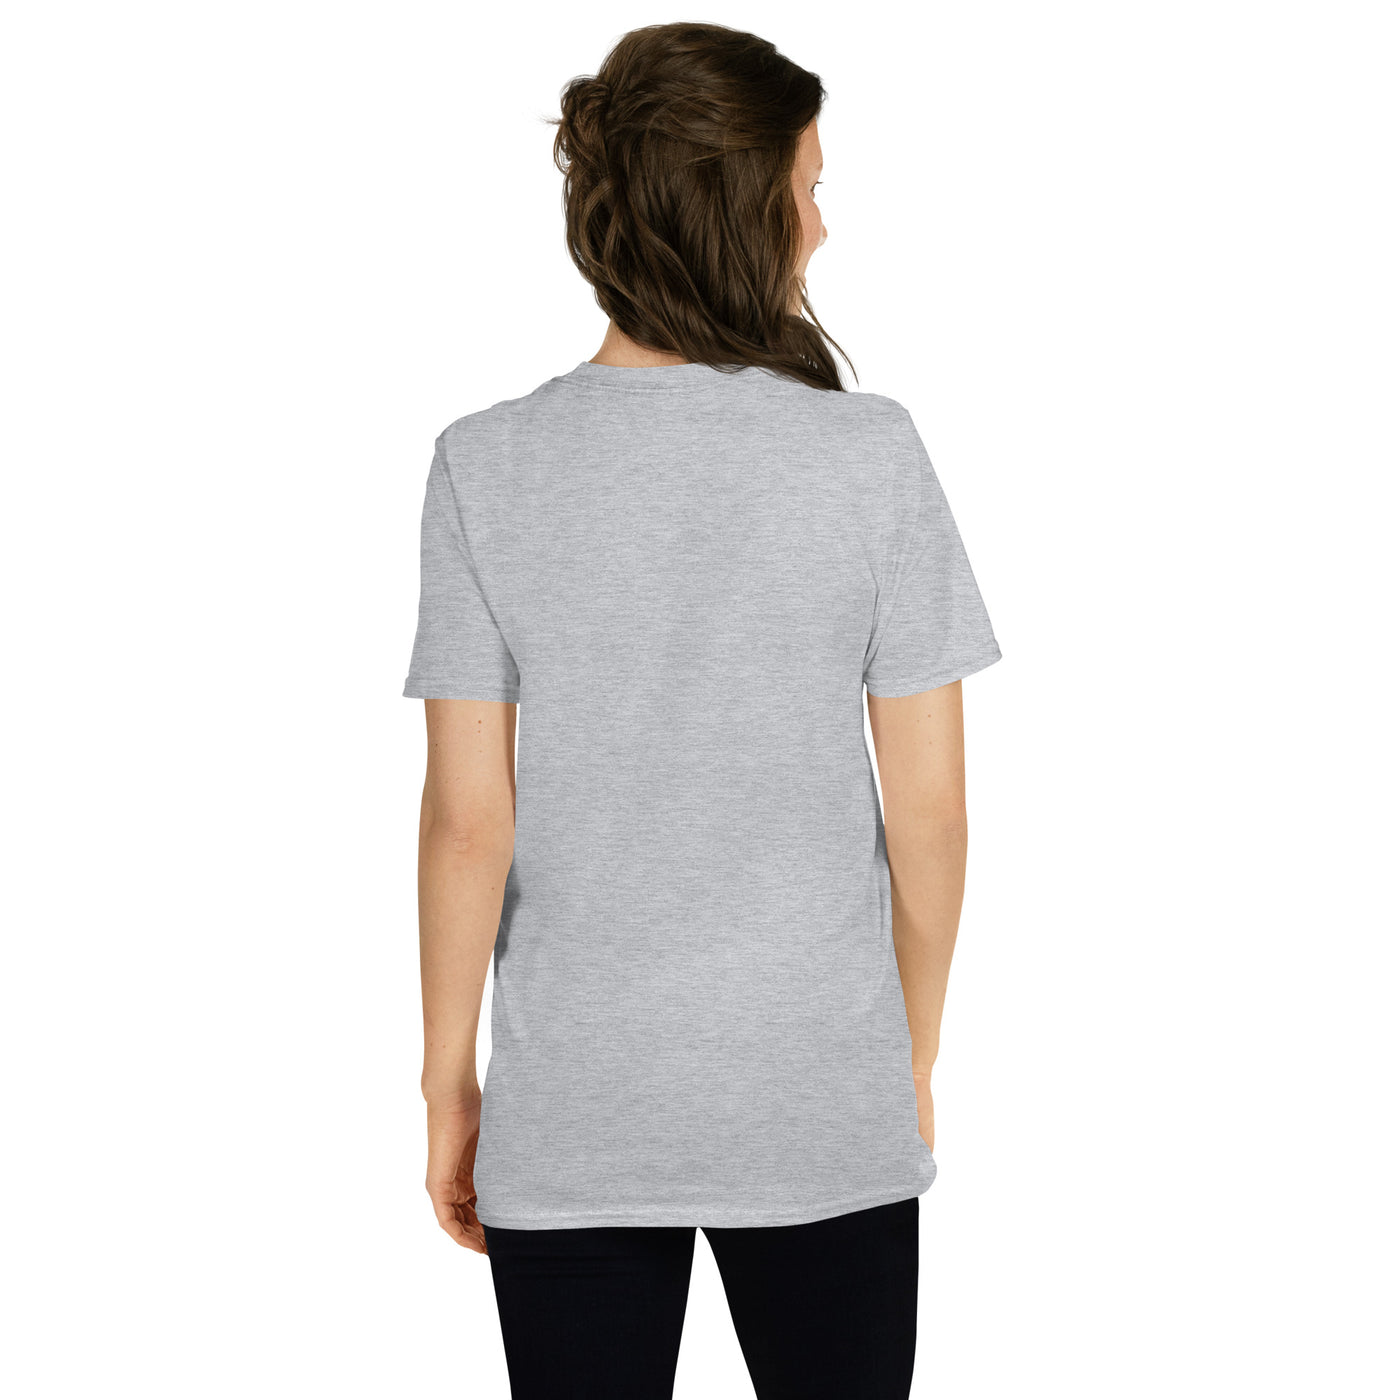 Cute Dachshund Howdy Pawtner Unisex T-Shirt